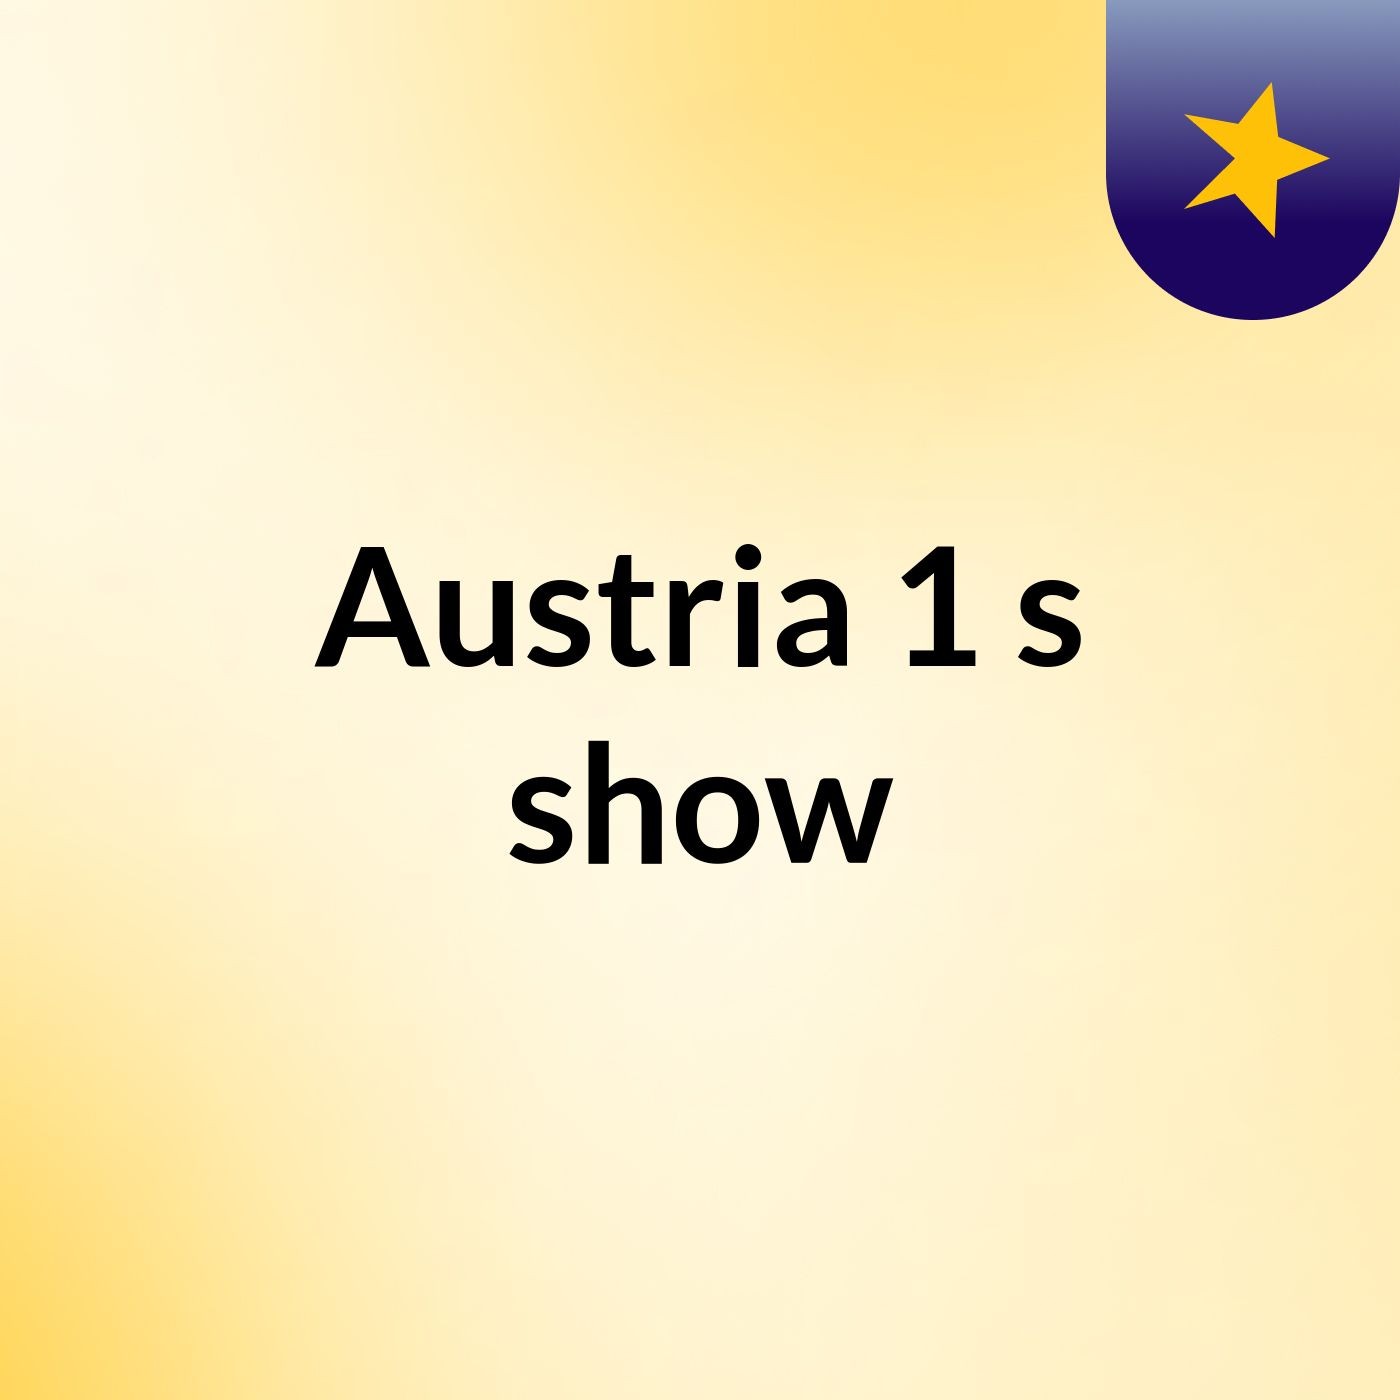 Austria 1's show